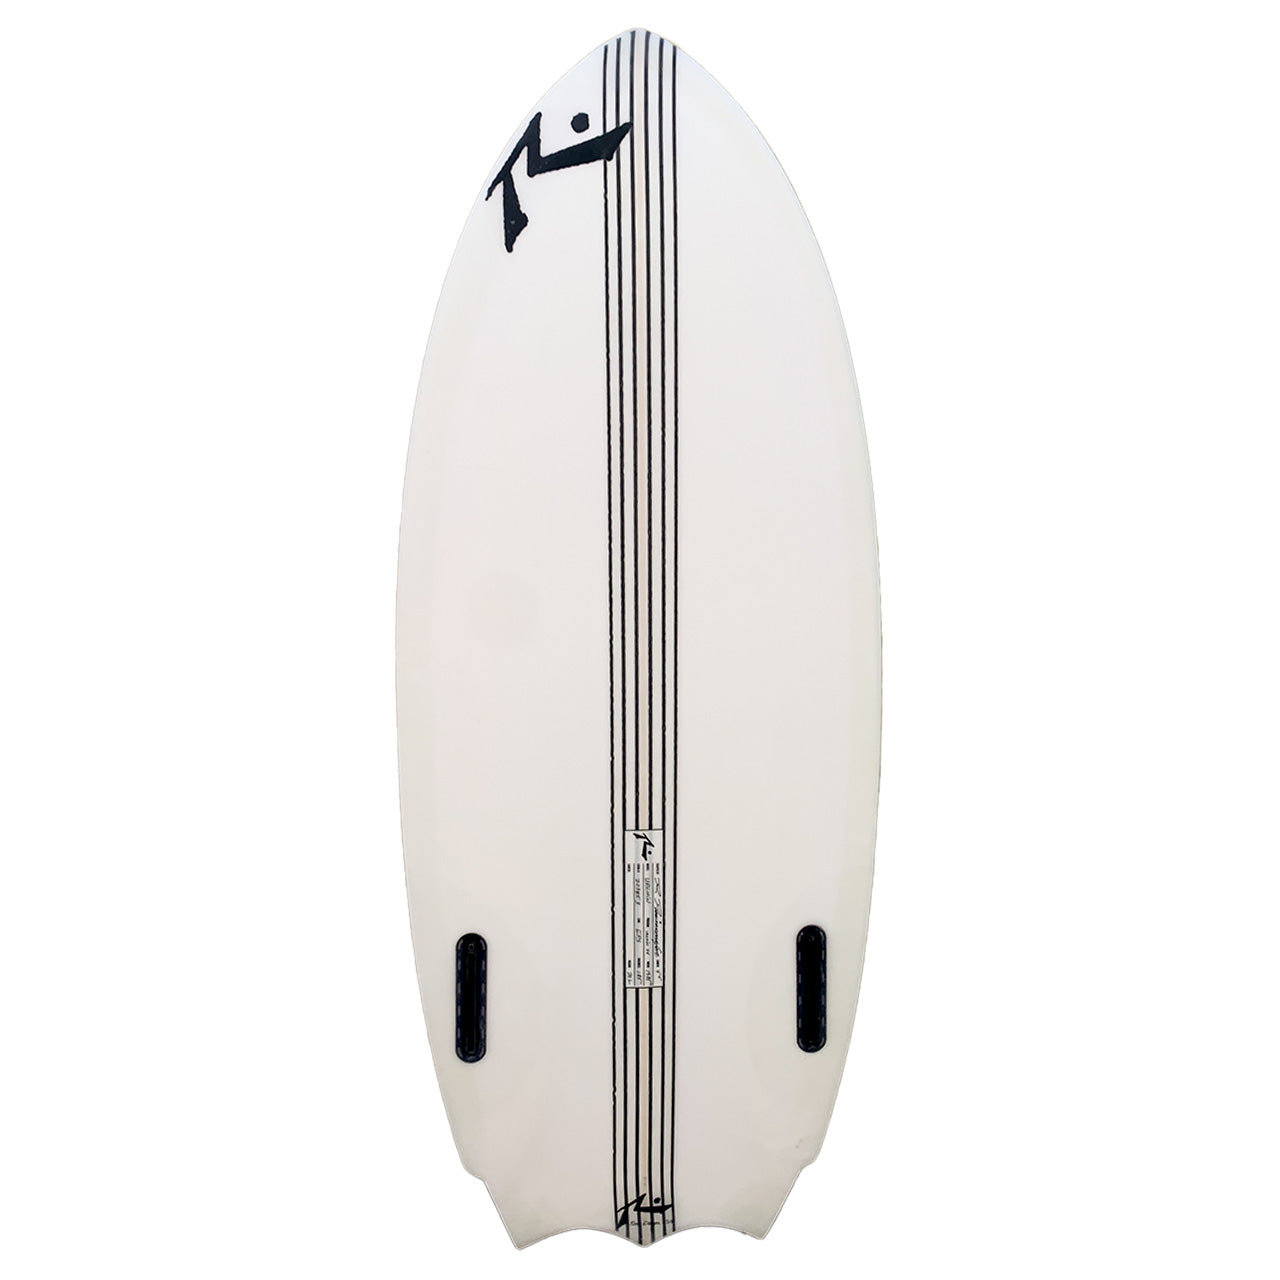 Urchin Wakesurf Board - Rusty Surfboards - Top View - White